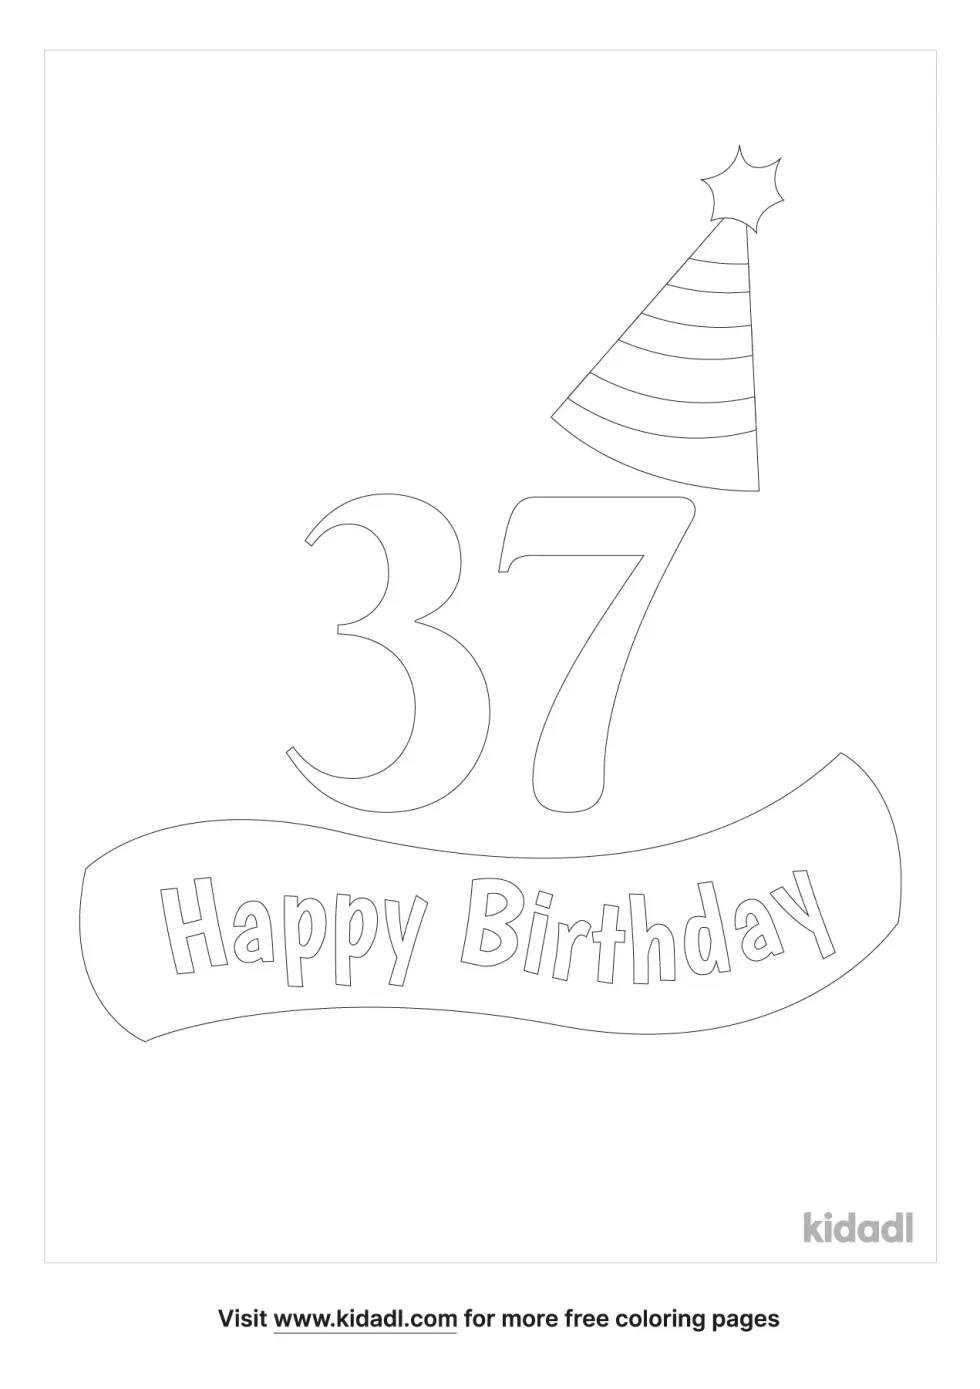 Happy 37th Birthday